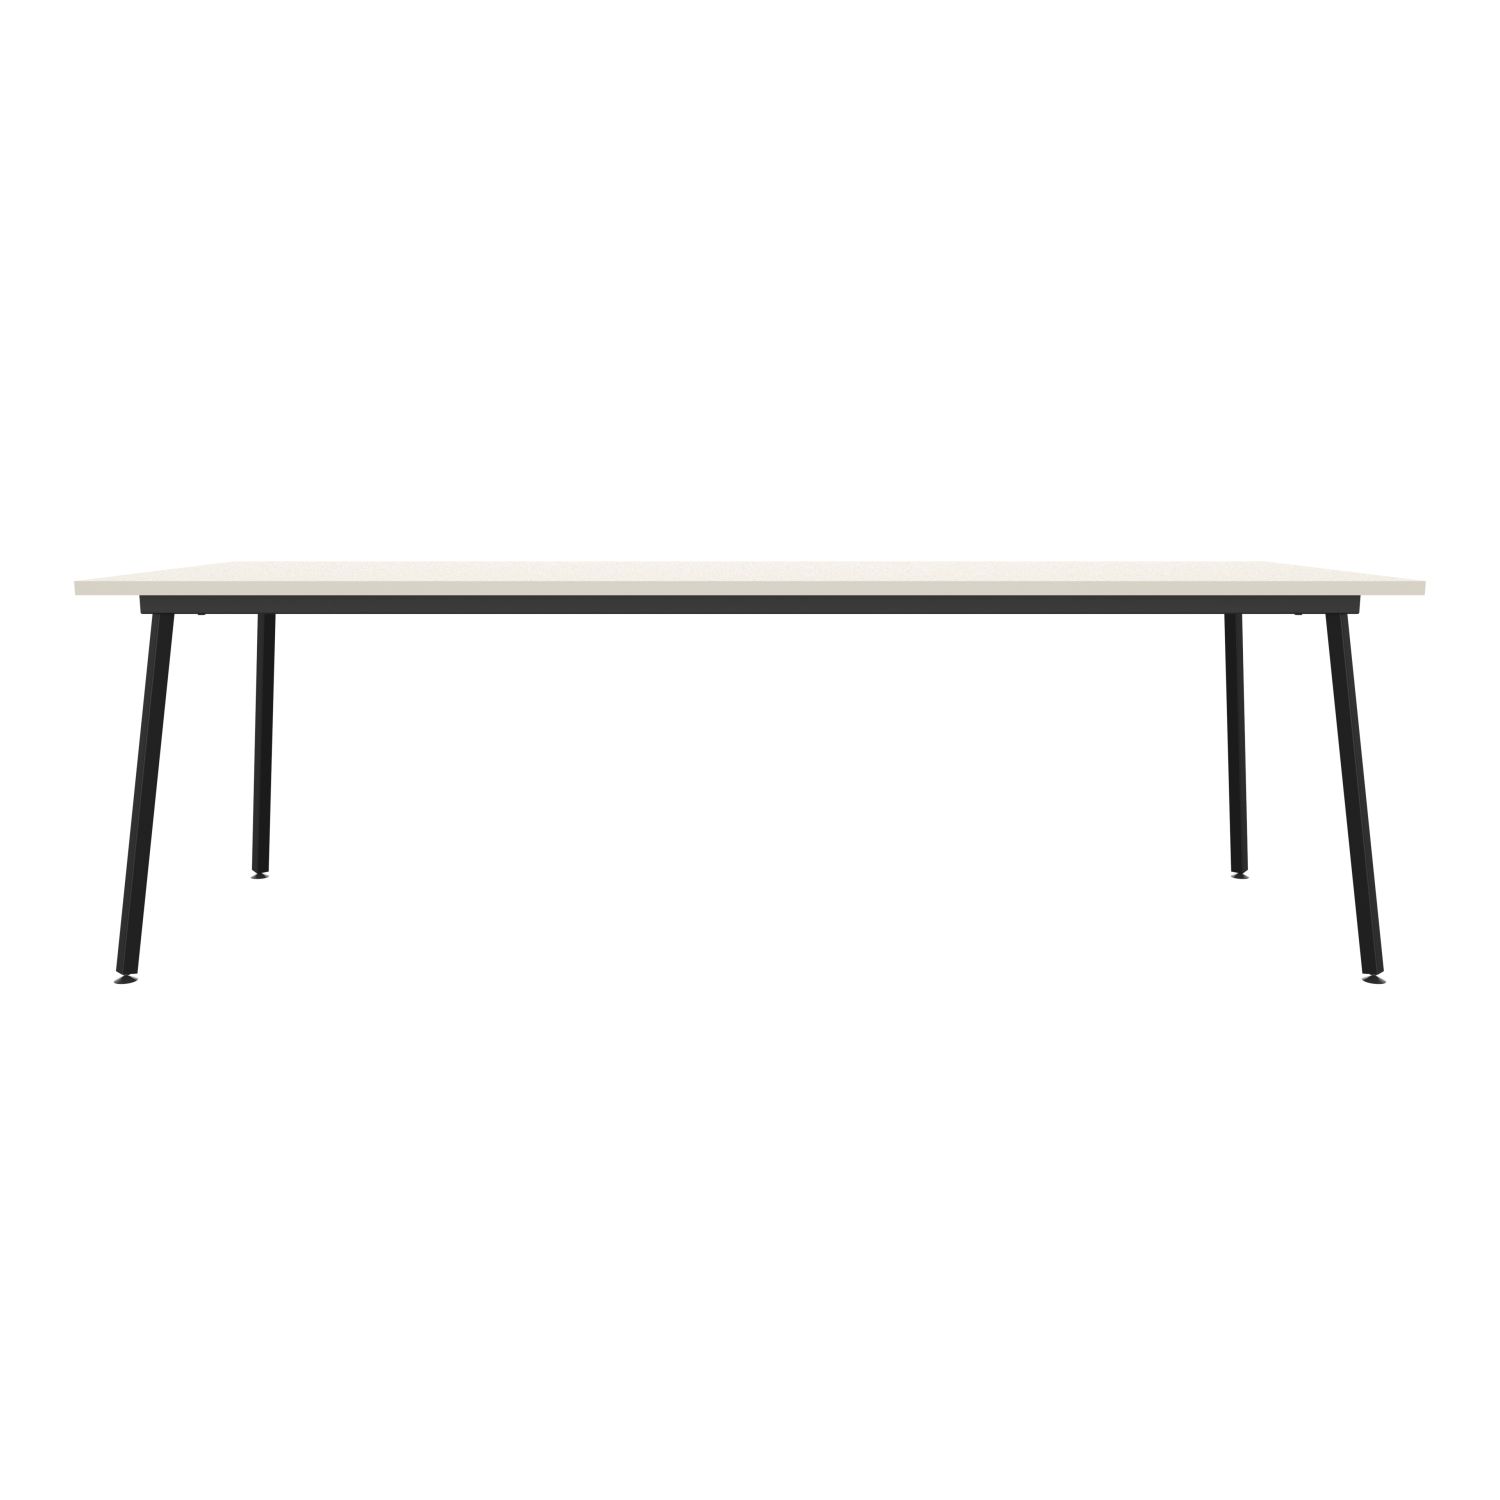 lensvelt maarten baas table fixed height 80x240 table top 26 mm top melamine boring grey edge abs boring grey black frame ral9005